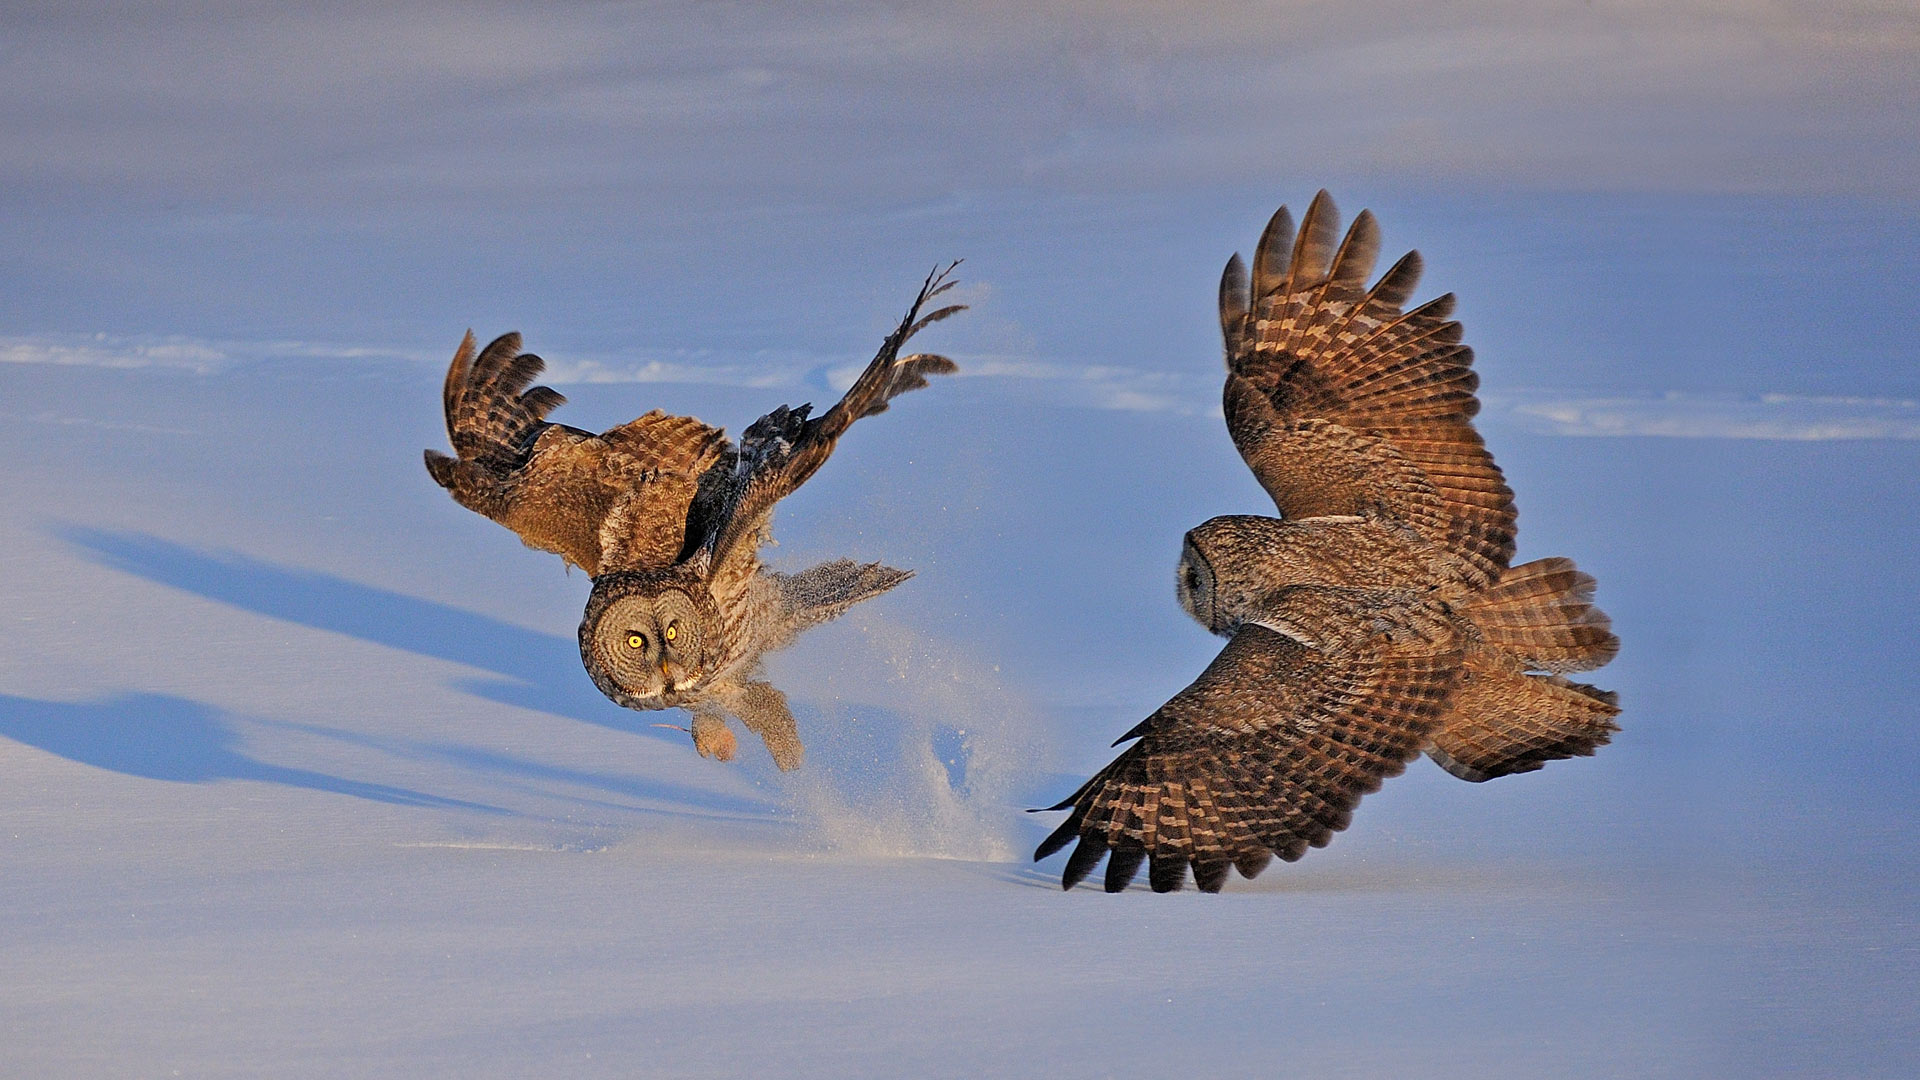 General 1920x1080 nature animals owl fighting snow jumping birds winter